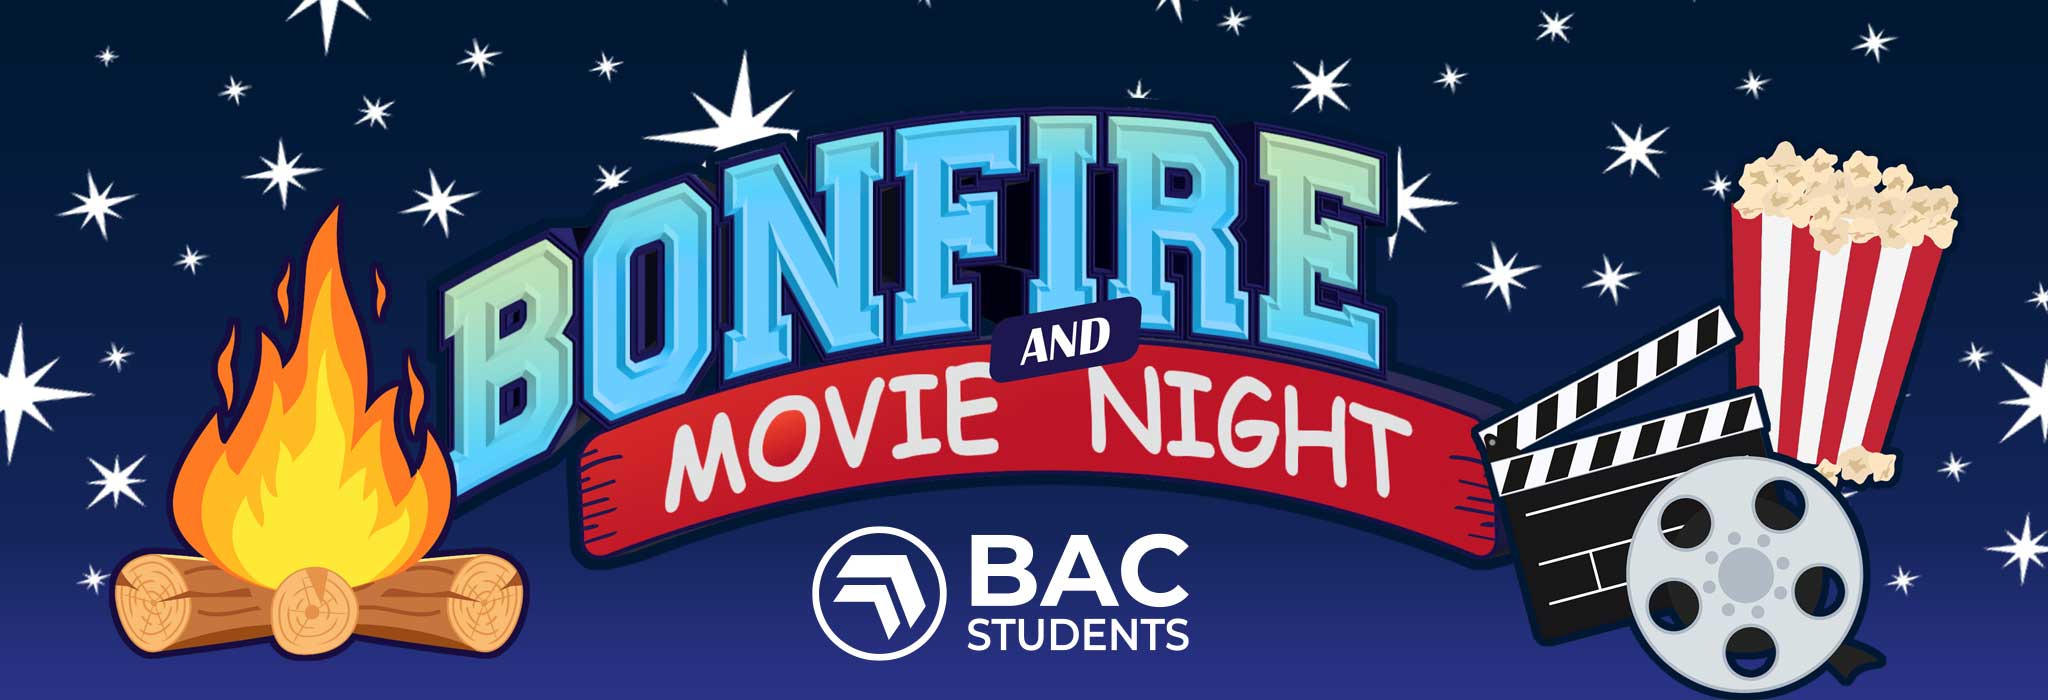 BAC Students Bonfire & Movie Night